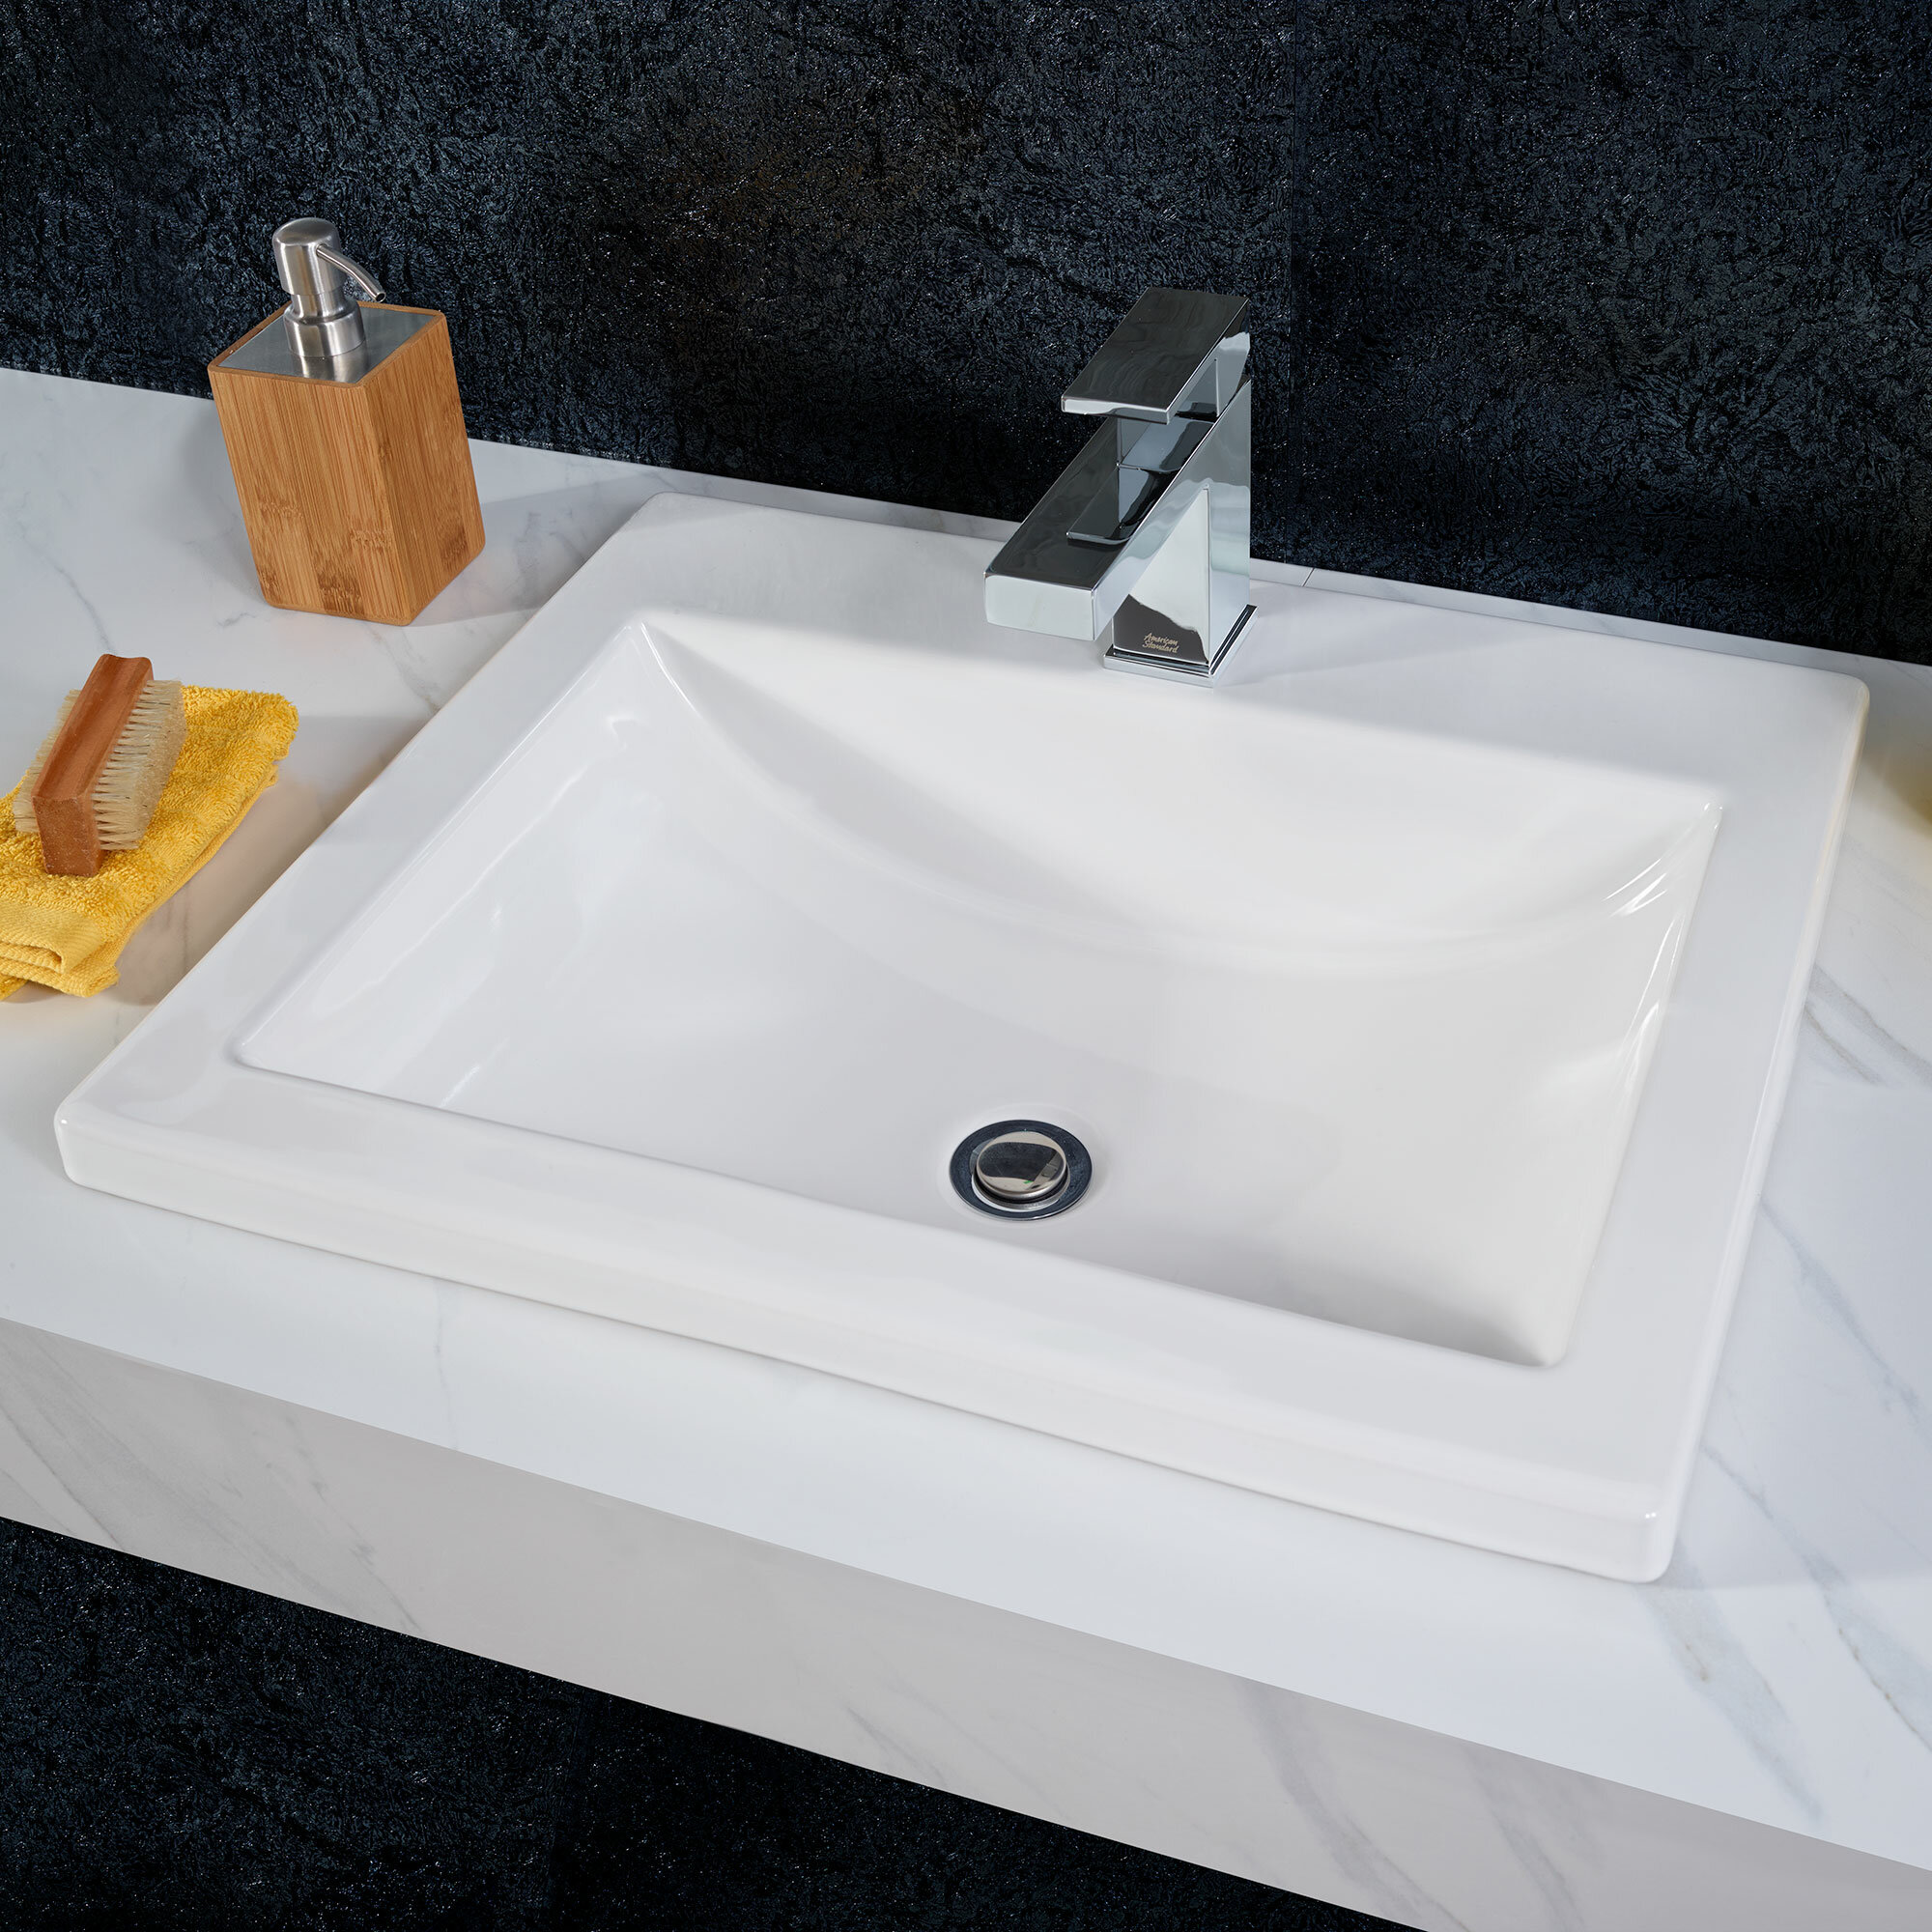 American Standard Studio Vitreous China Rectangular Drop In Bathroom Sink With Overflow Reviews Wayfair